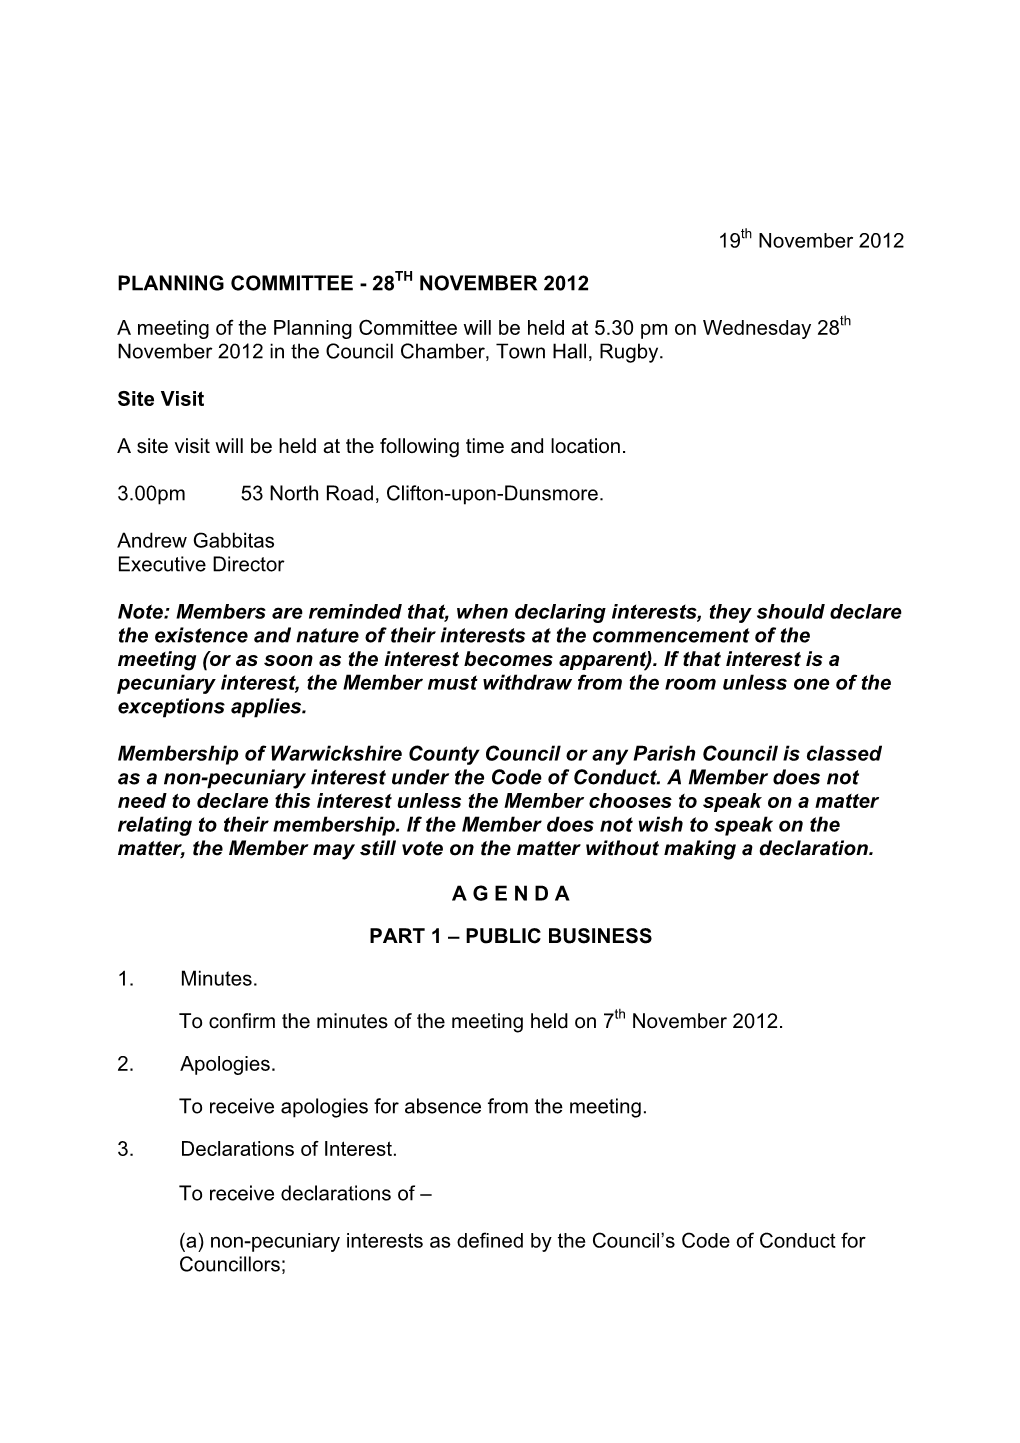 Planning Committee 28 November 2012 Agenda